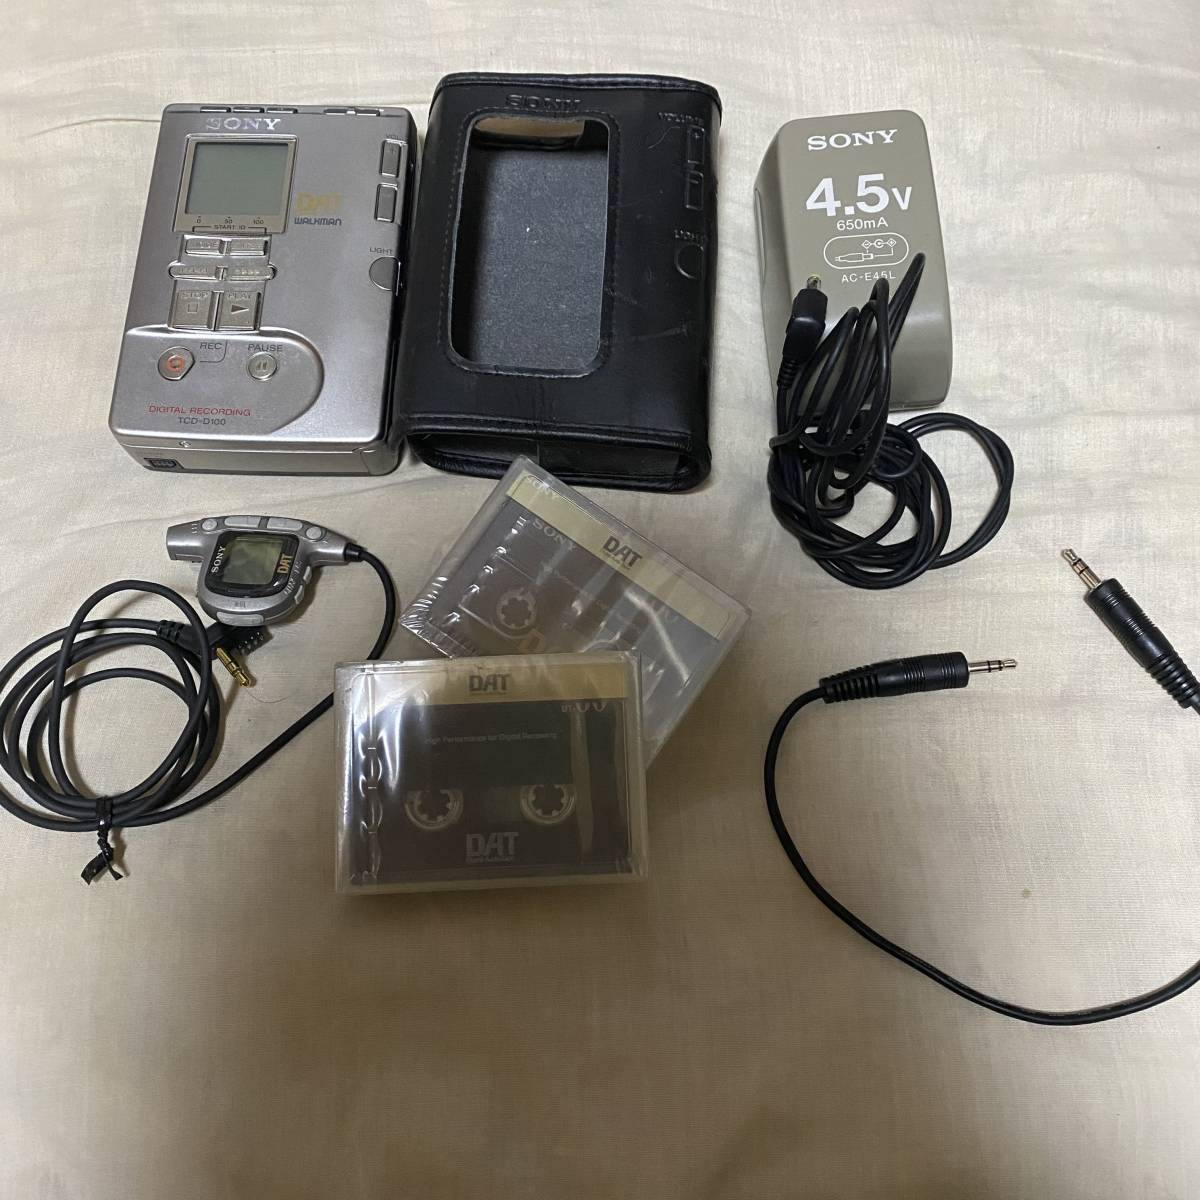 SONY TCD-D100 ウォークマン DATテープレコーダー ポータブル カセットテープ付き_付属品一覧です